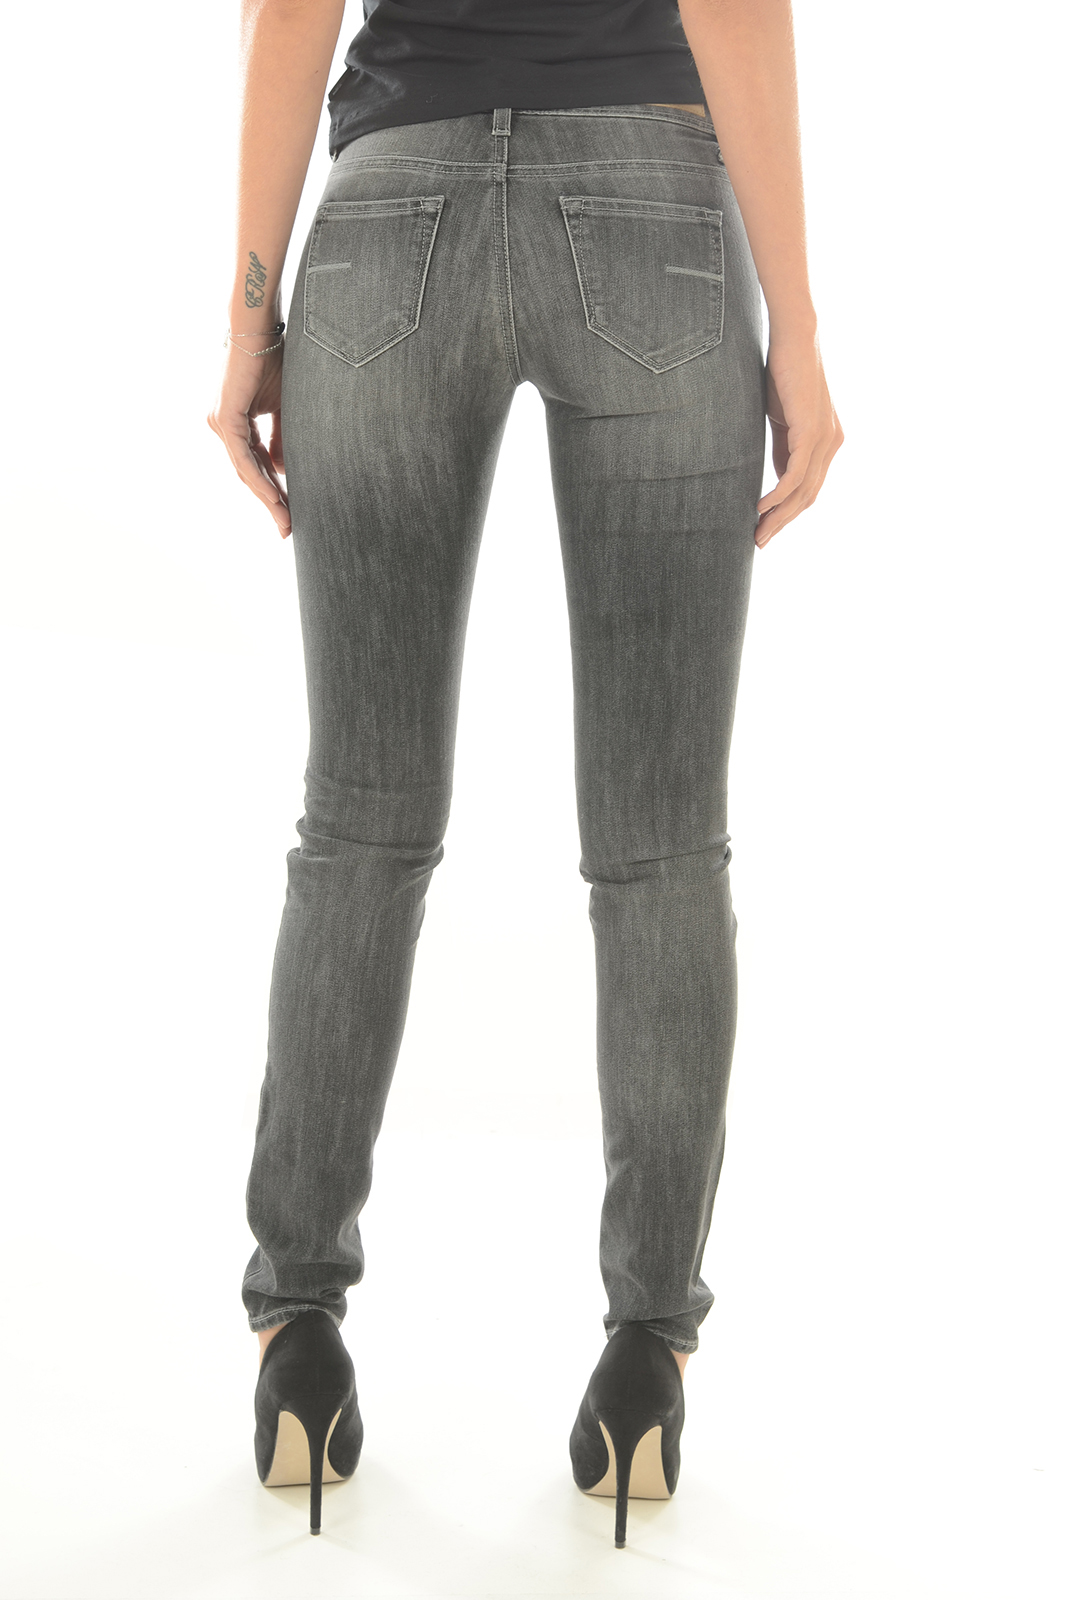 Jeans gris skinny stretch pour femme Meltin'pot J- Marceline W D1515